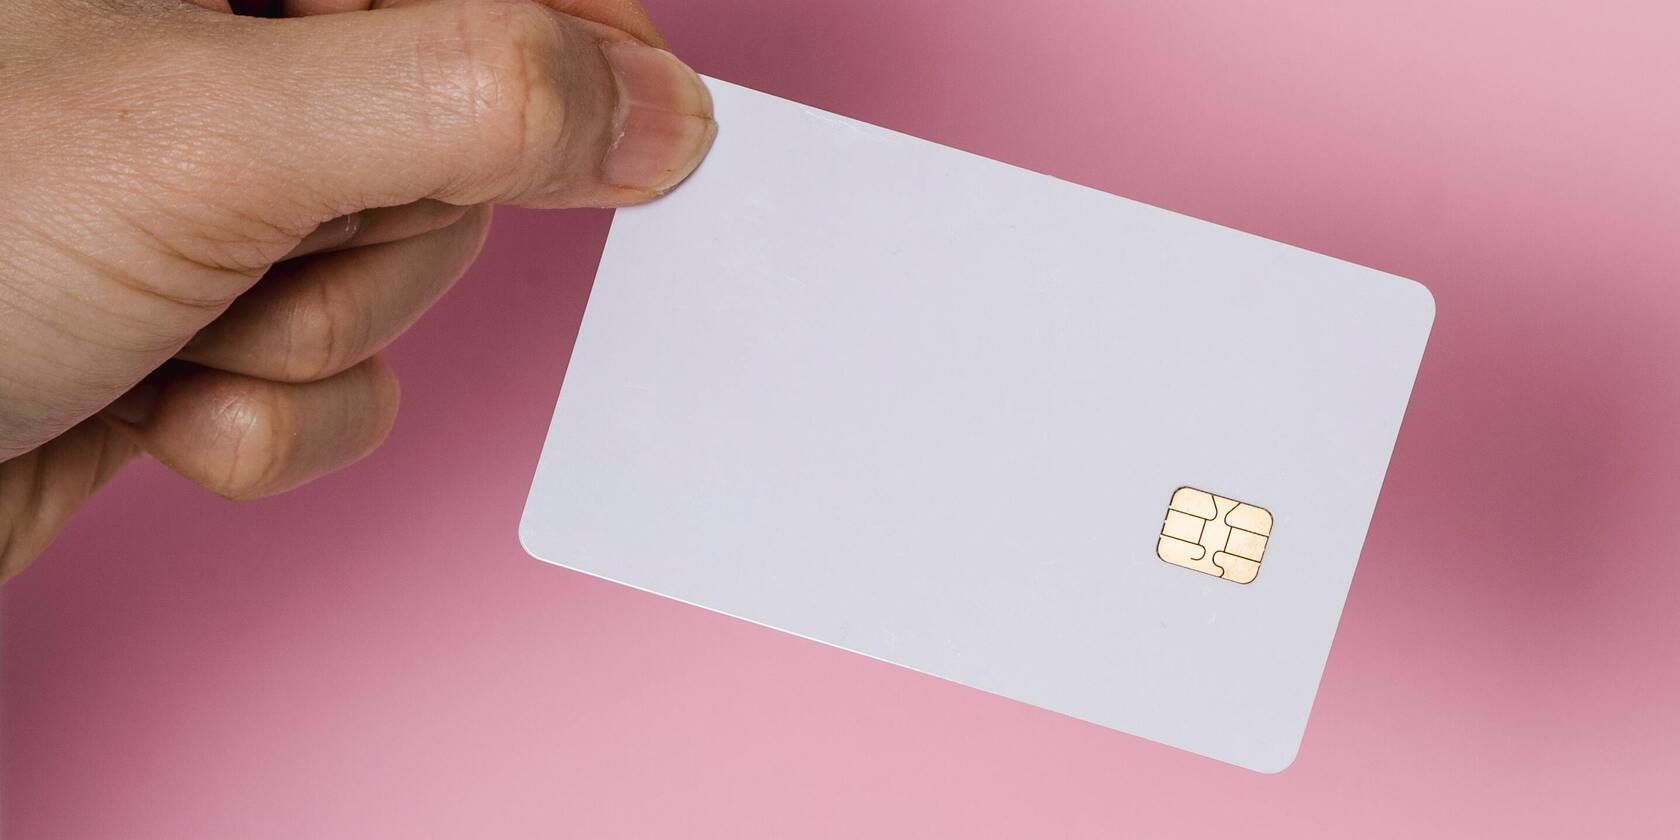 Obtaining PUK Code For Unlocking Your SIM Card